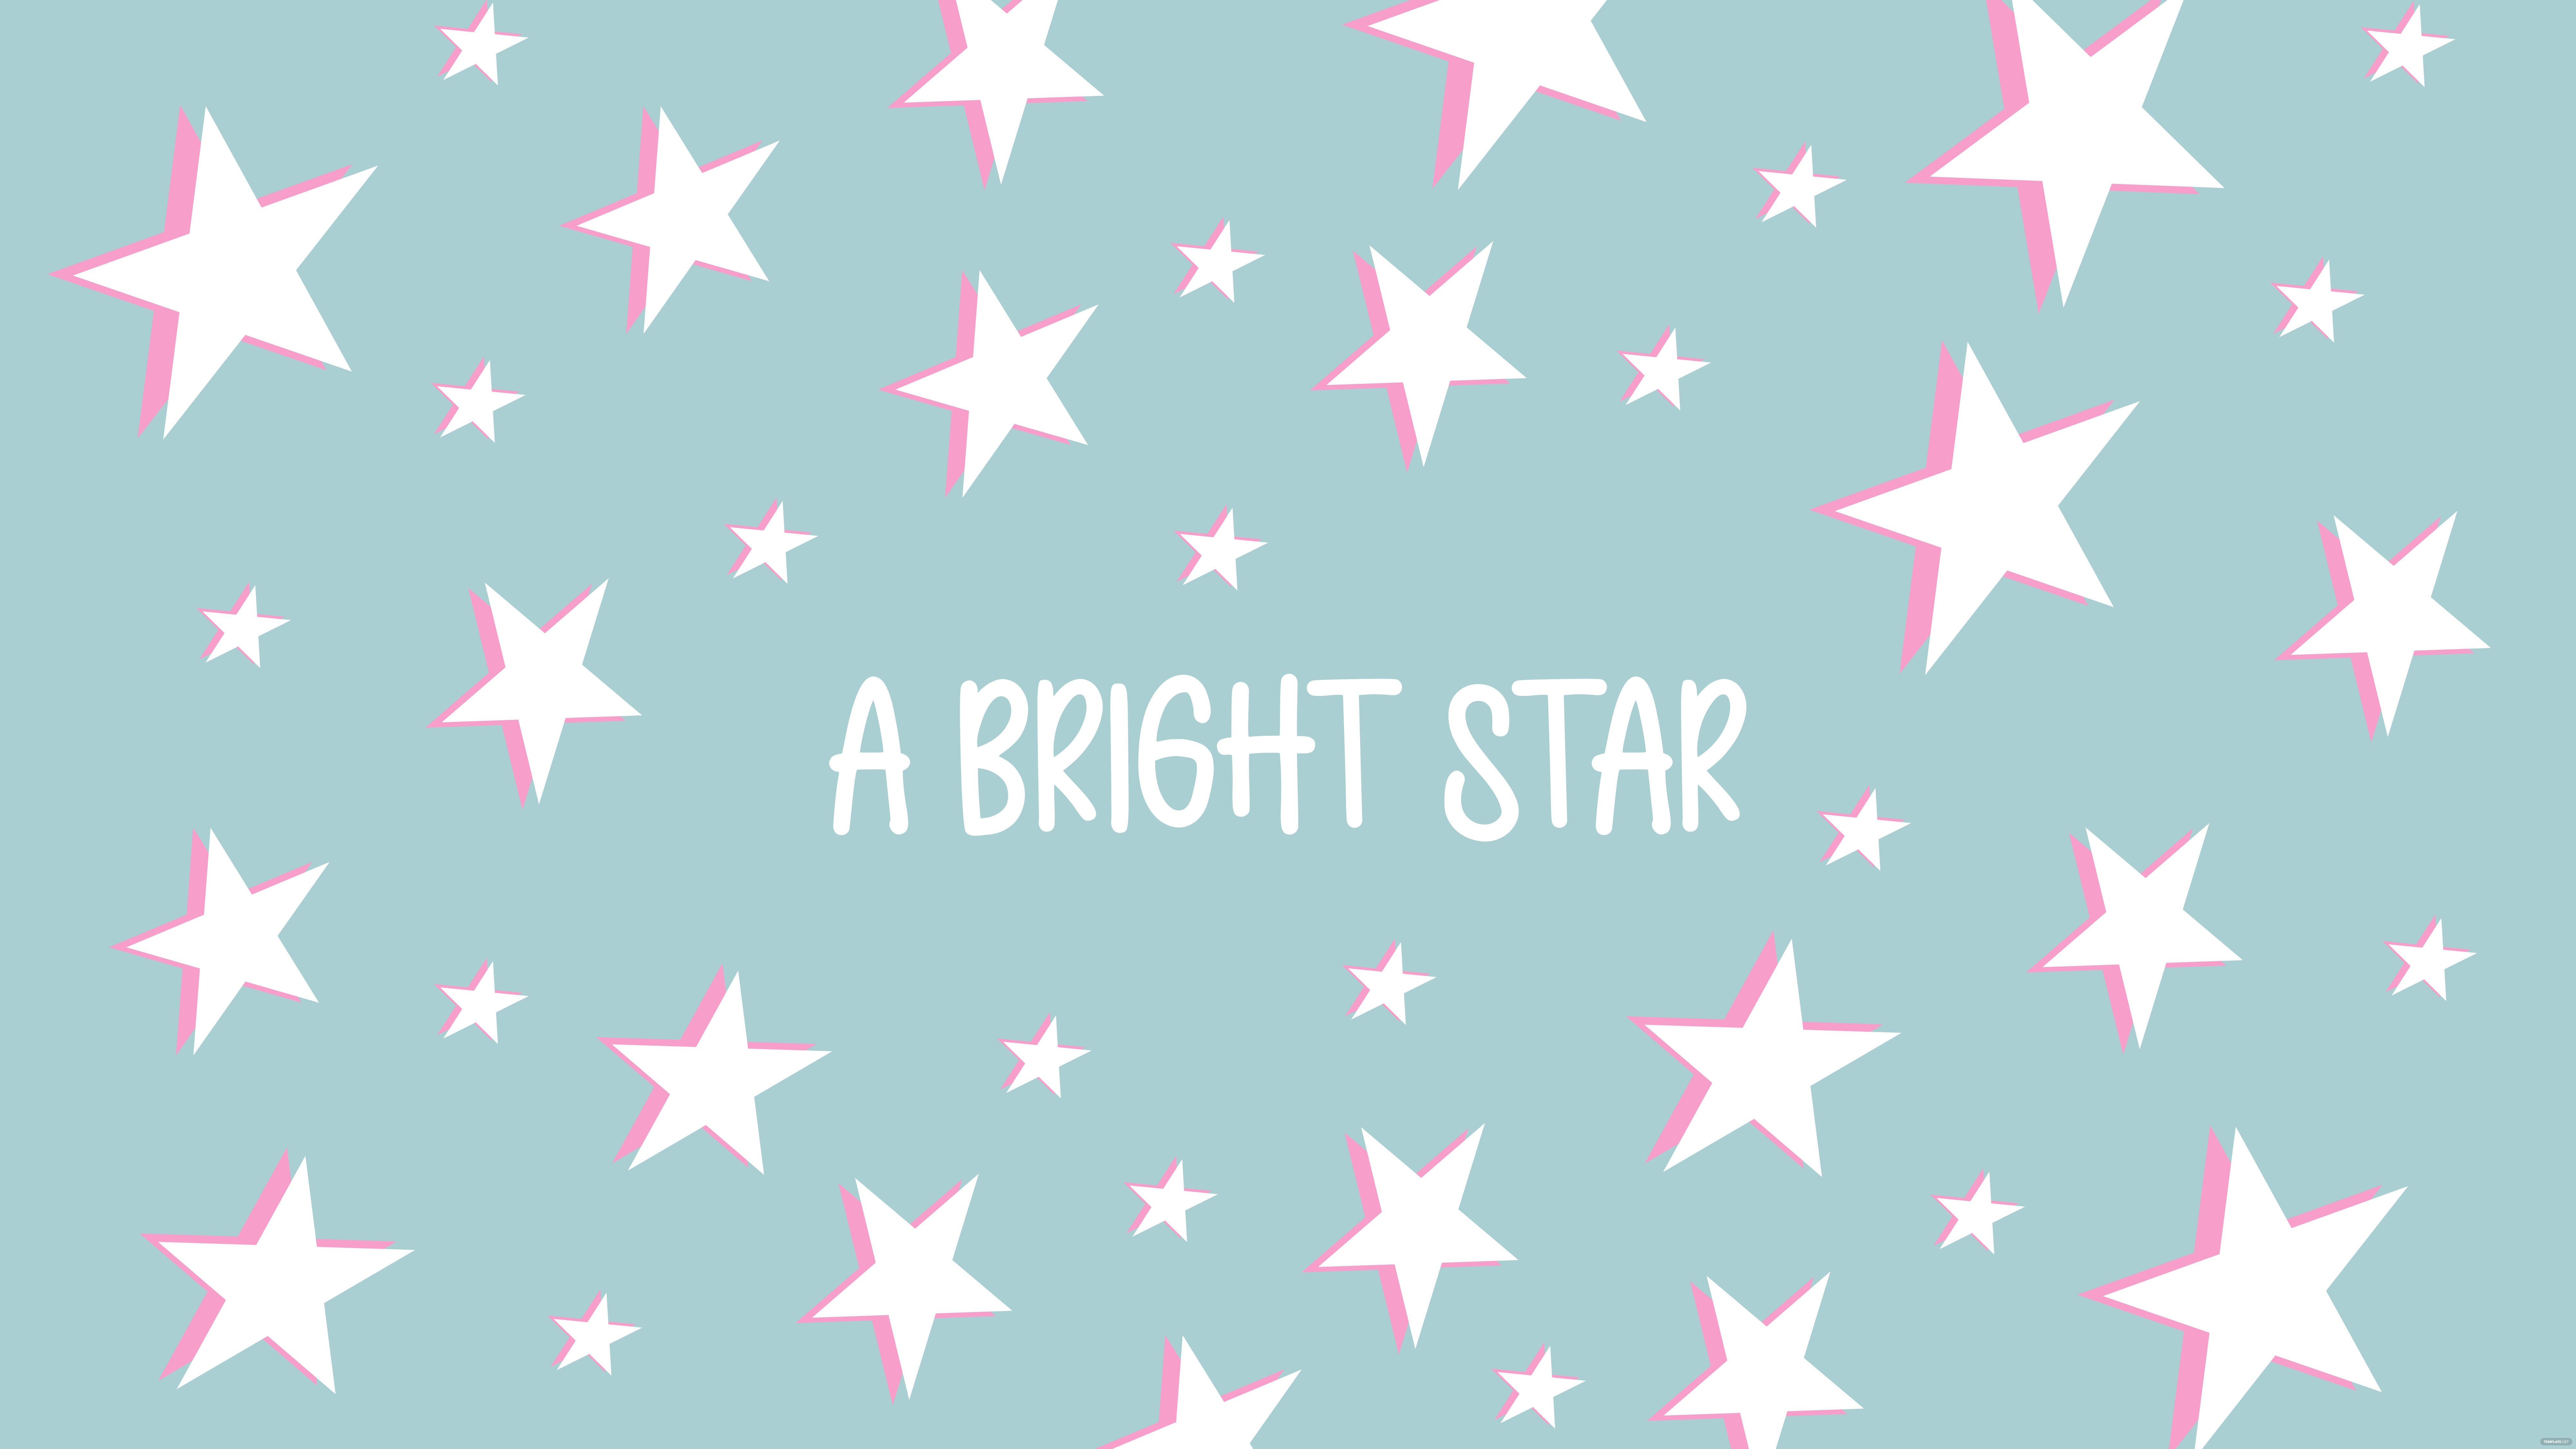 A bright star wallpaper - Preppy